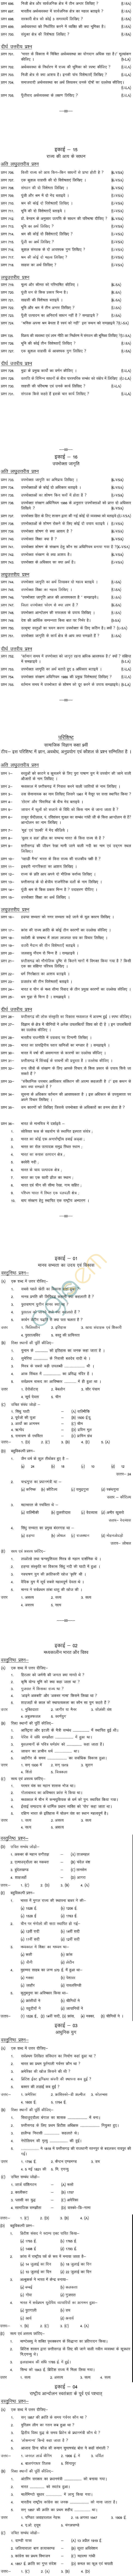 Chhattisgarh Board Class 09 Question Bank - Social Science